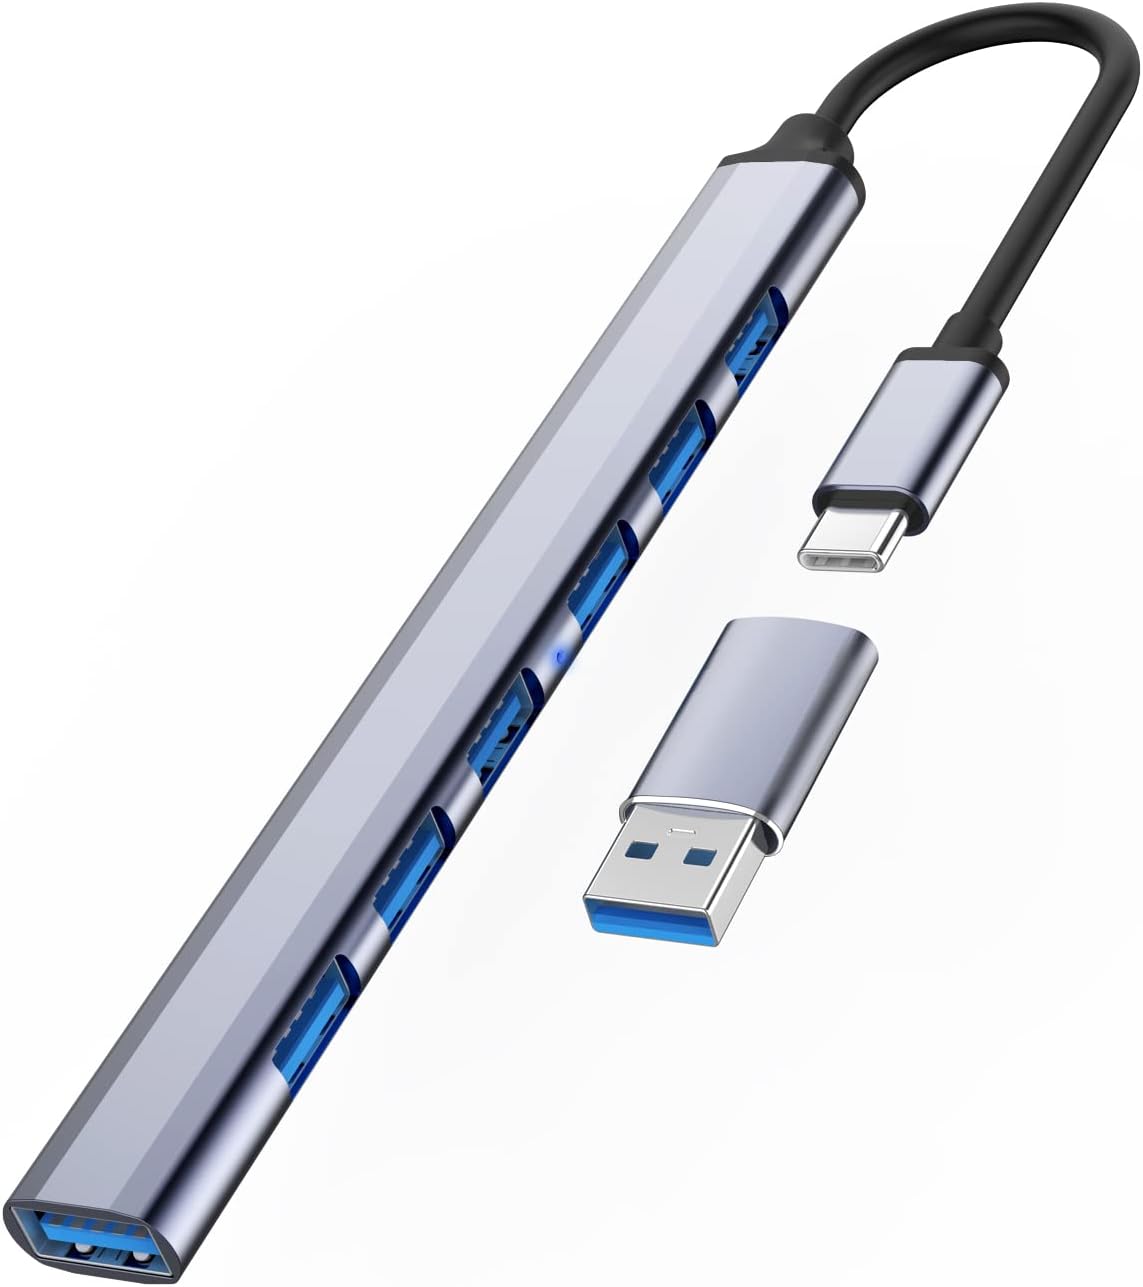 موزع USB فئة A وUSB فئة C 7 في 1 - رمادي